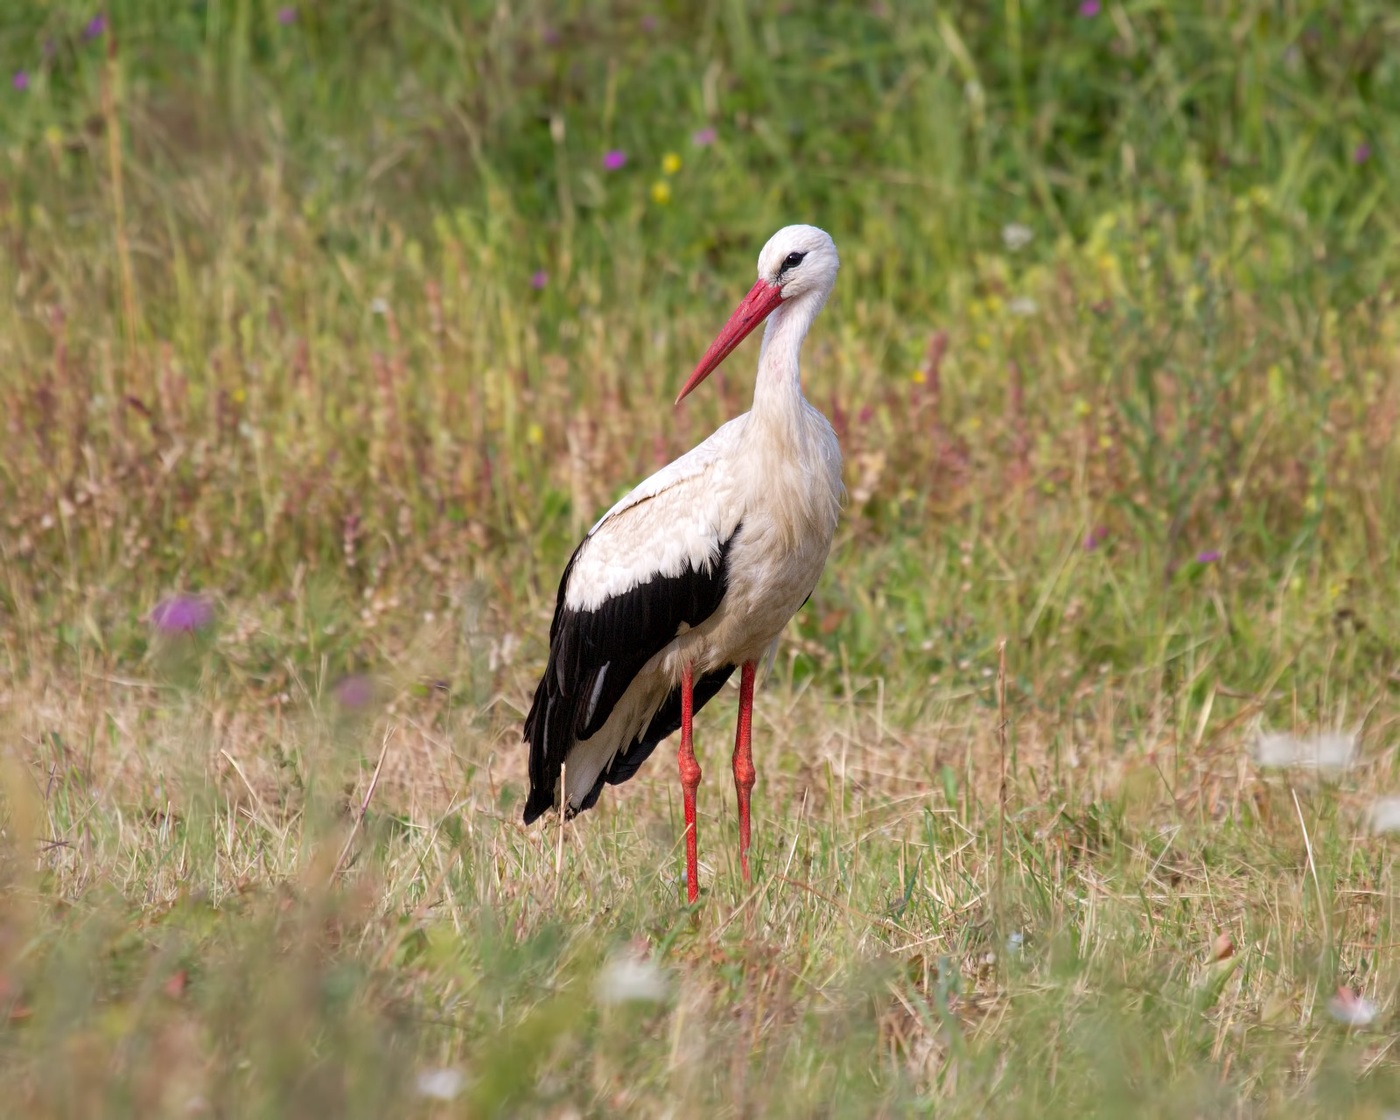 Stork in the field